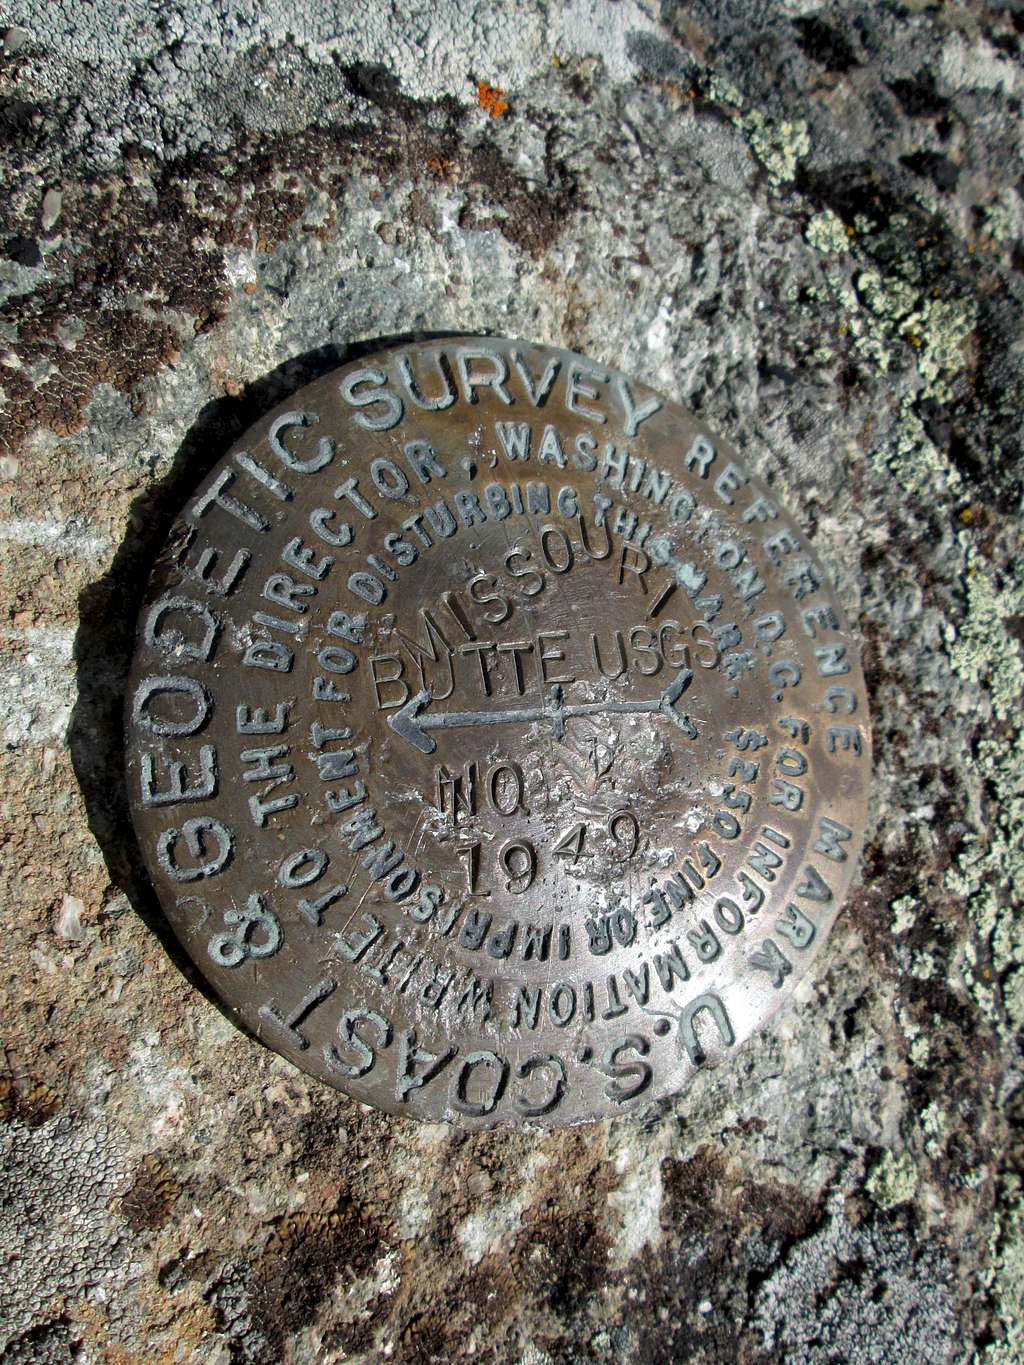 USGS Marker on top of the Northwest Missouri Butte